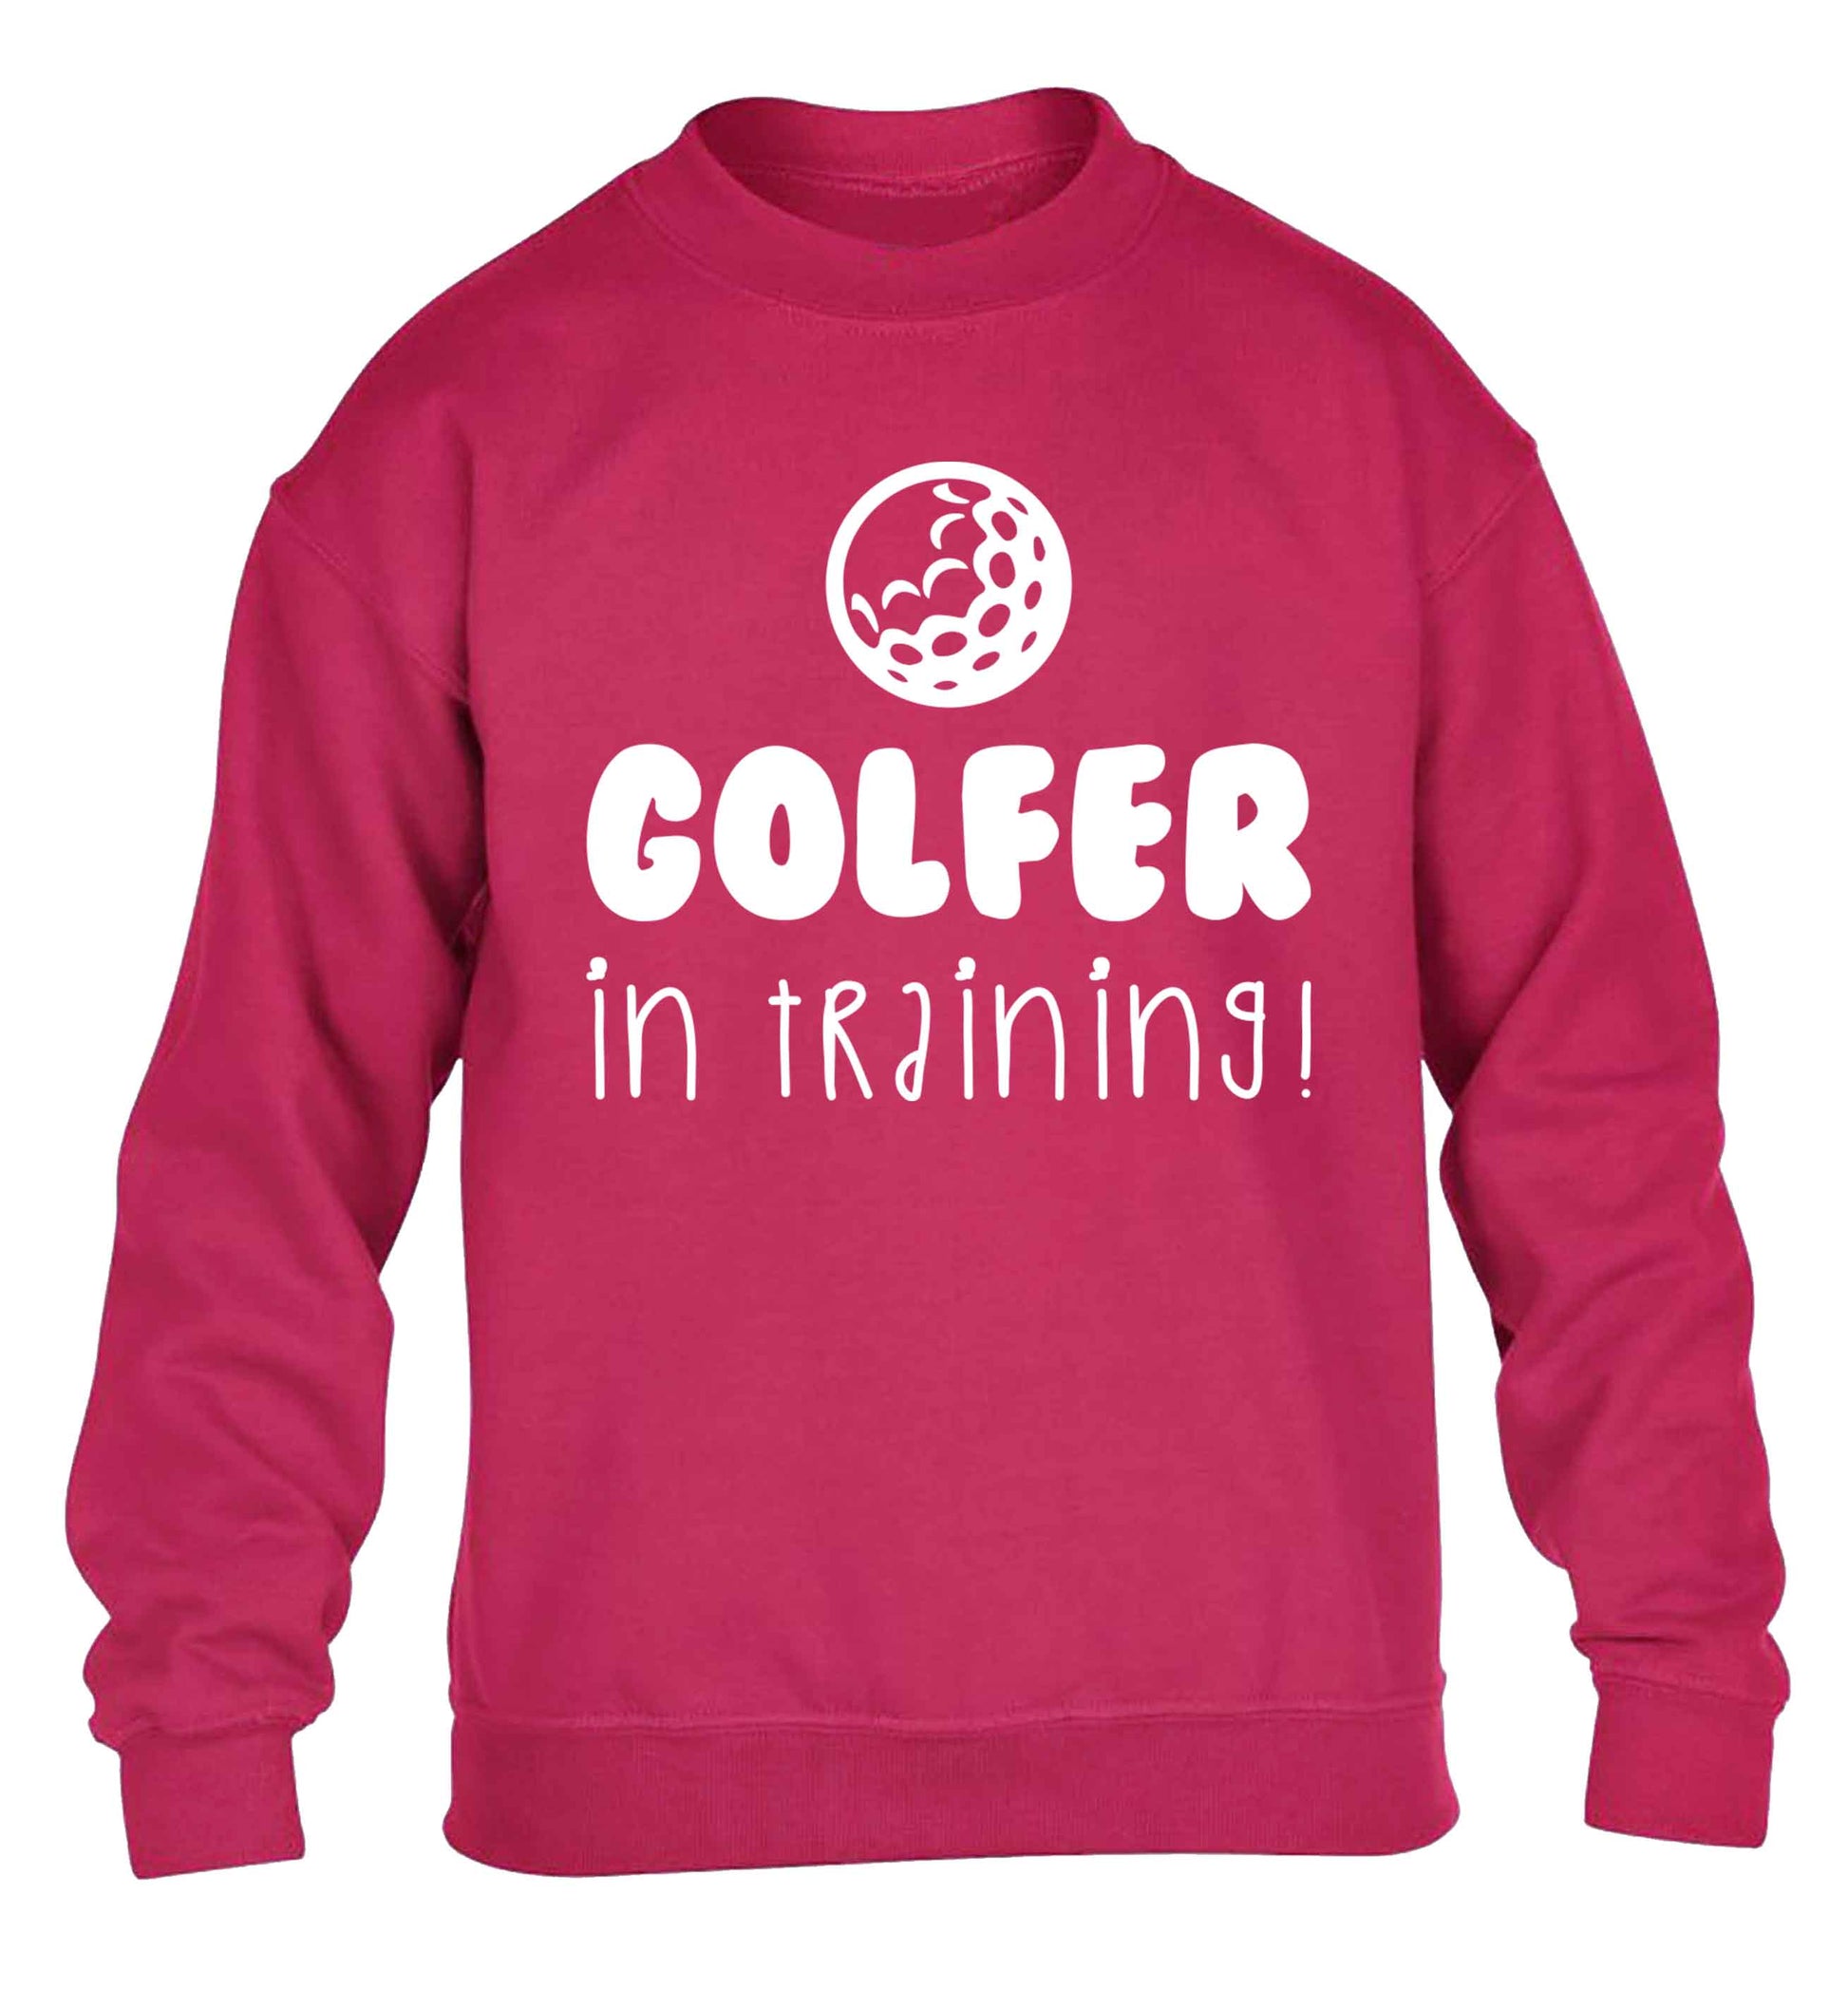 Golfer in training children's pink sweater 12-13 Years